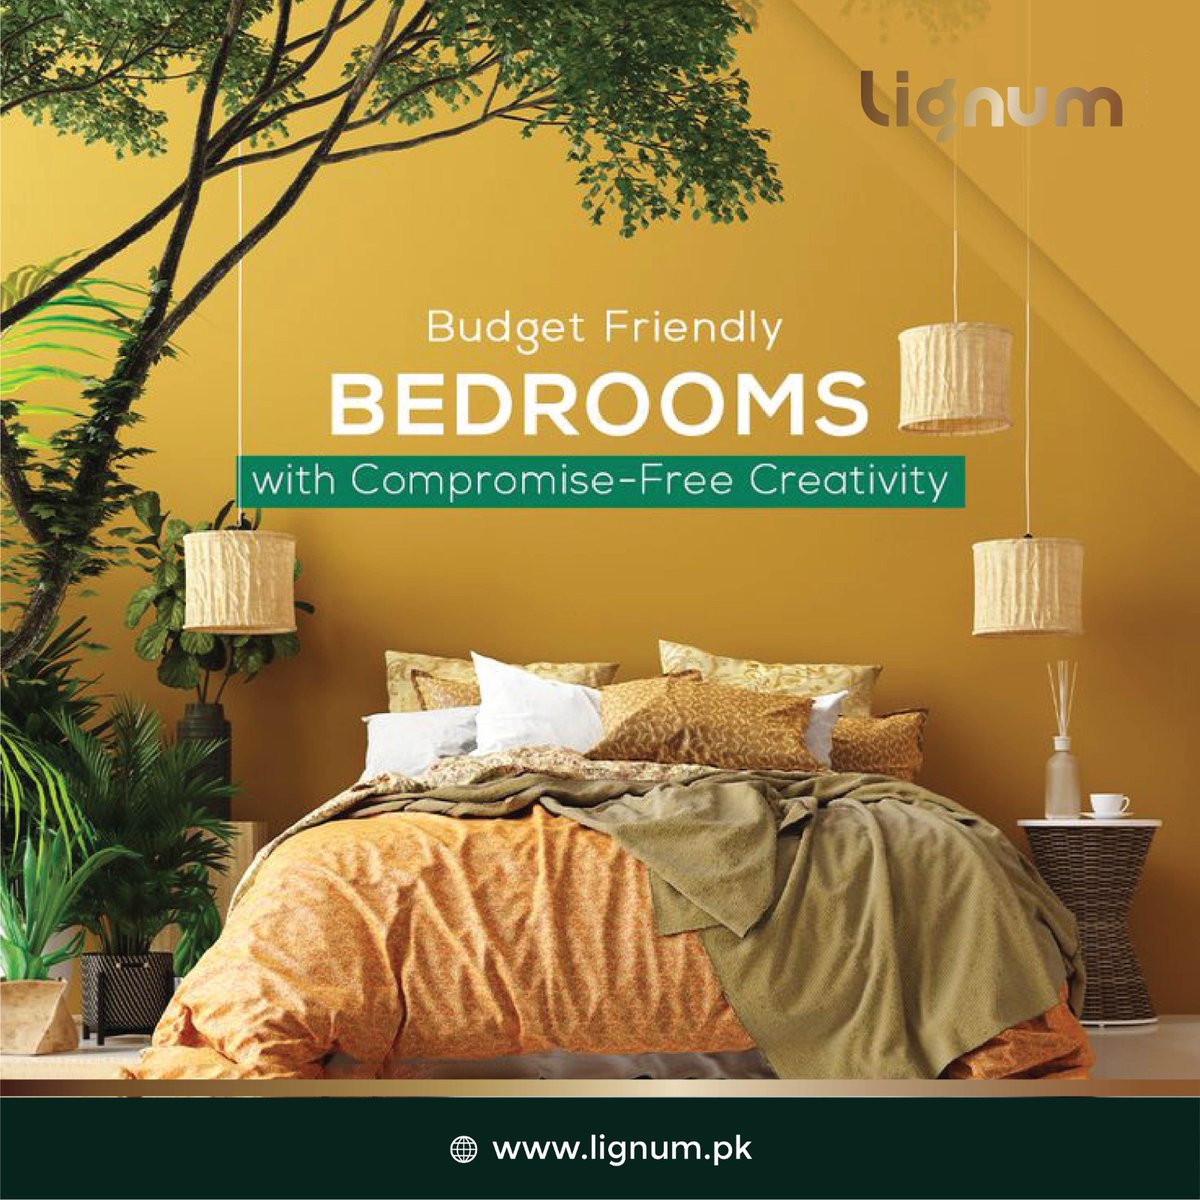 Budget Friendly Bedrooms.
lignum.pk
#WoodInteriors #InteriorDesign #HomeDecor #WoodenFurniture #RusticChic #ModernWoodDesign #NaturalLiving #BespokeInteriors #DesignInspiration #EcoFriendlyDesign #YourSpaceYourStyle